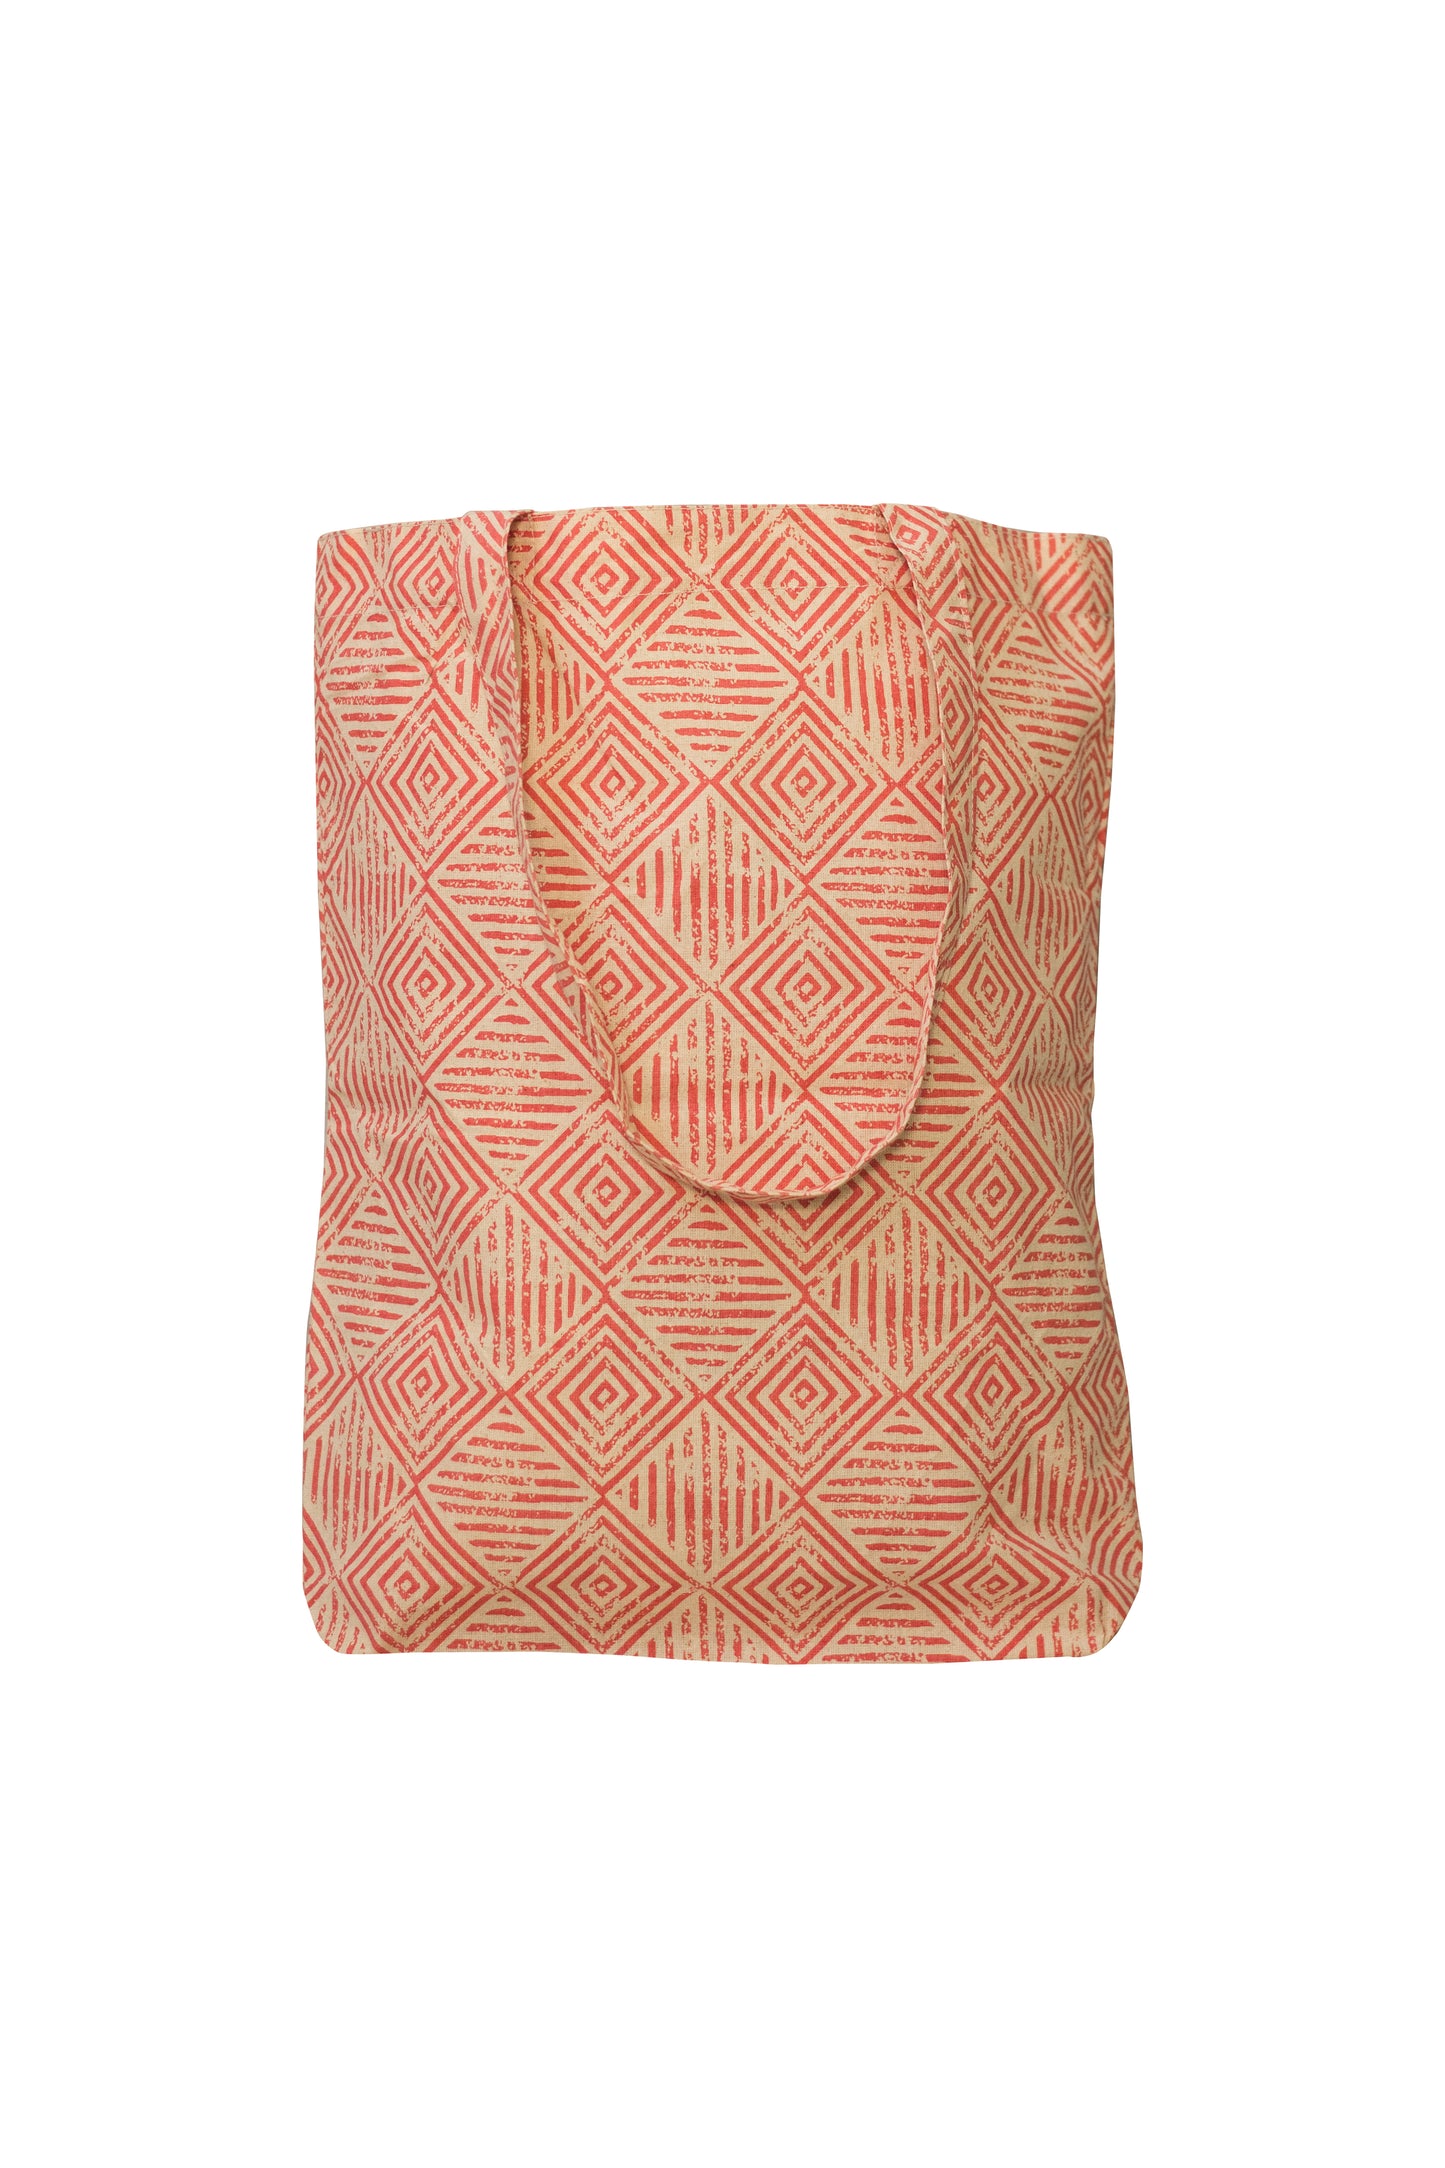 Diamond Peach Cotton Shopping Tote Bag